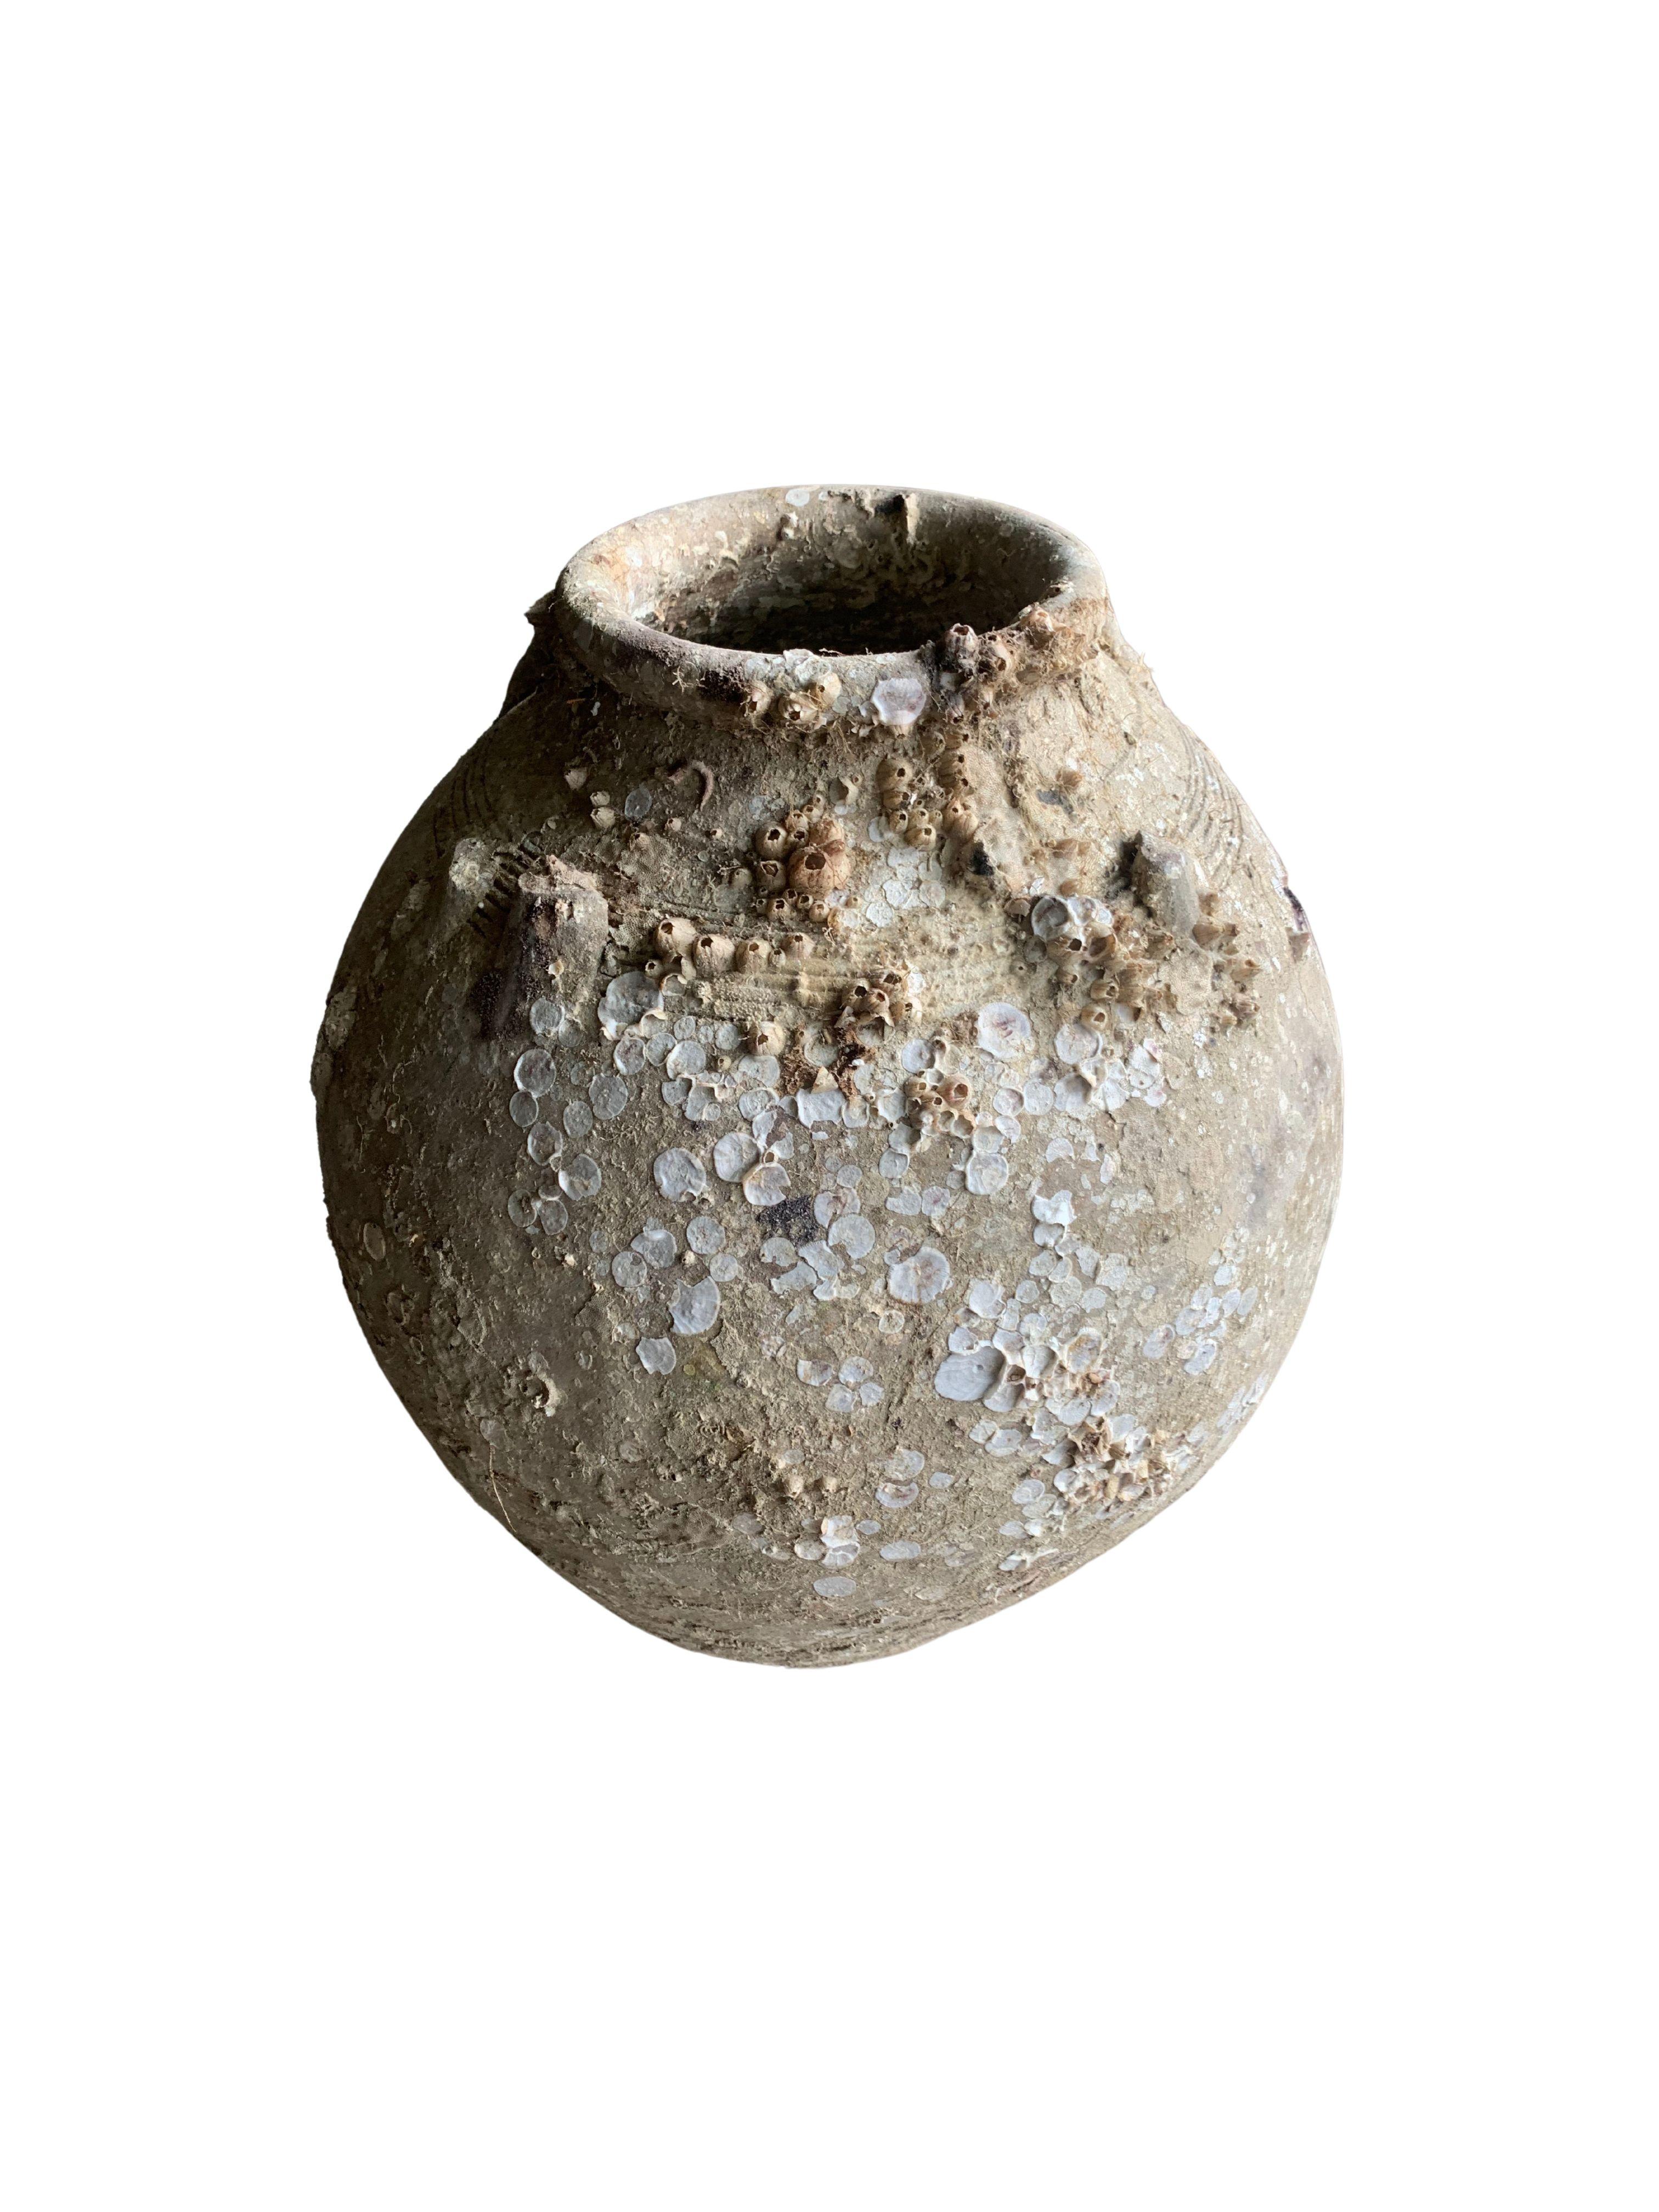 Ceramic Singburi Shipwreck Jar from the Kingdom of Sukhothai, Thailand, 17th Century